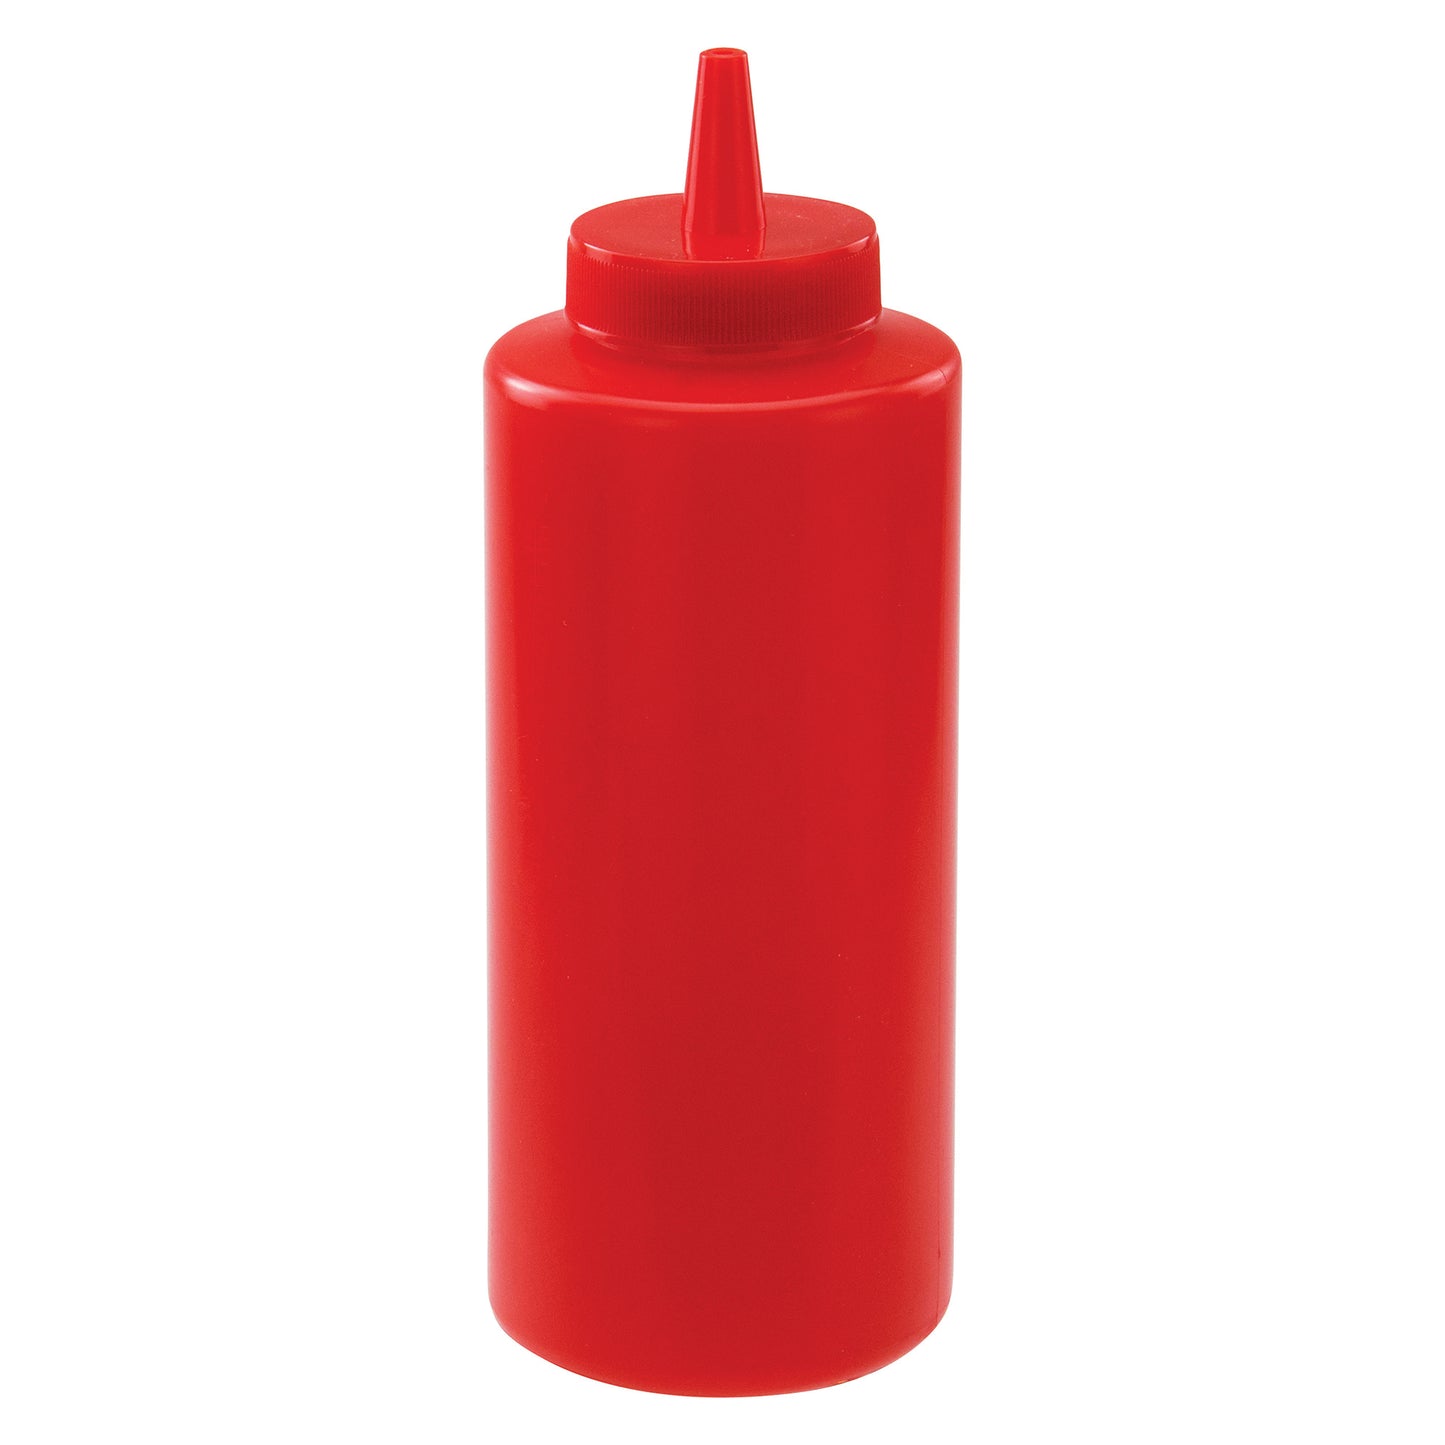 PSB-12R - Regular Squeeze Bottles - 12 oz, Red